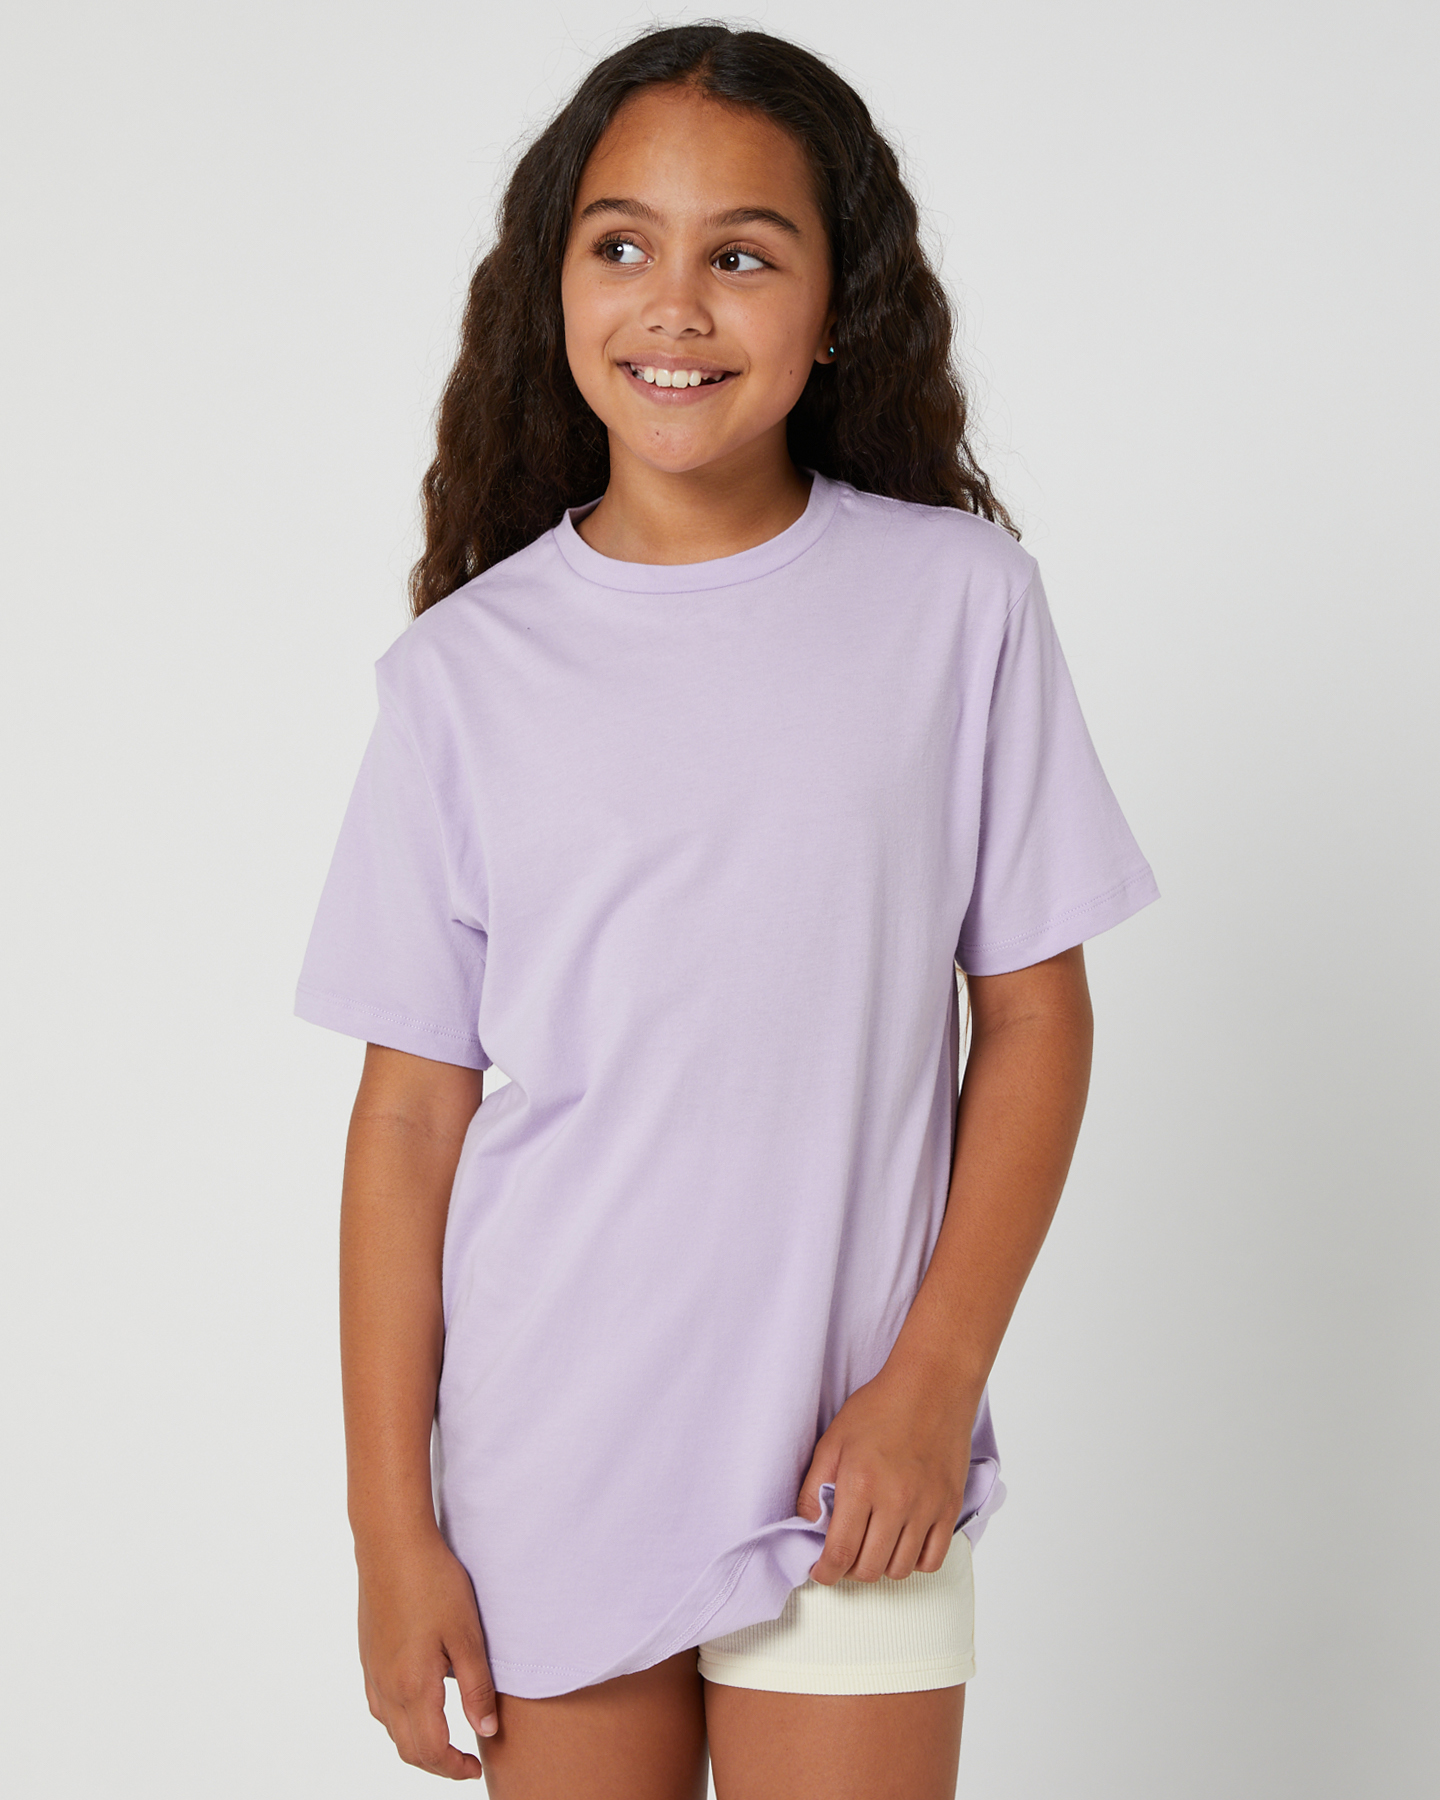 Shiwi T-shirt Bikini 'Leah Scoop' in Purple, Lilac